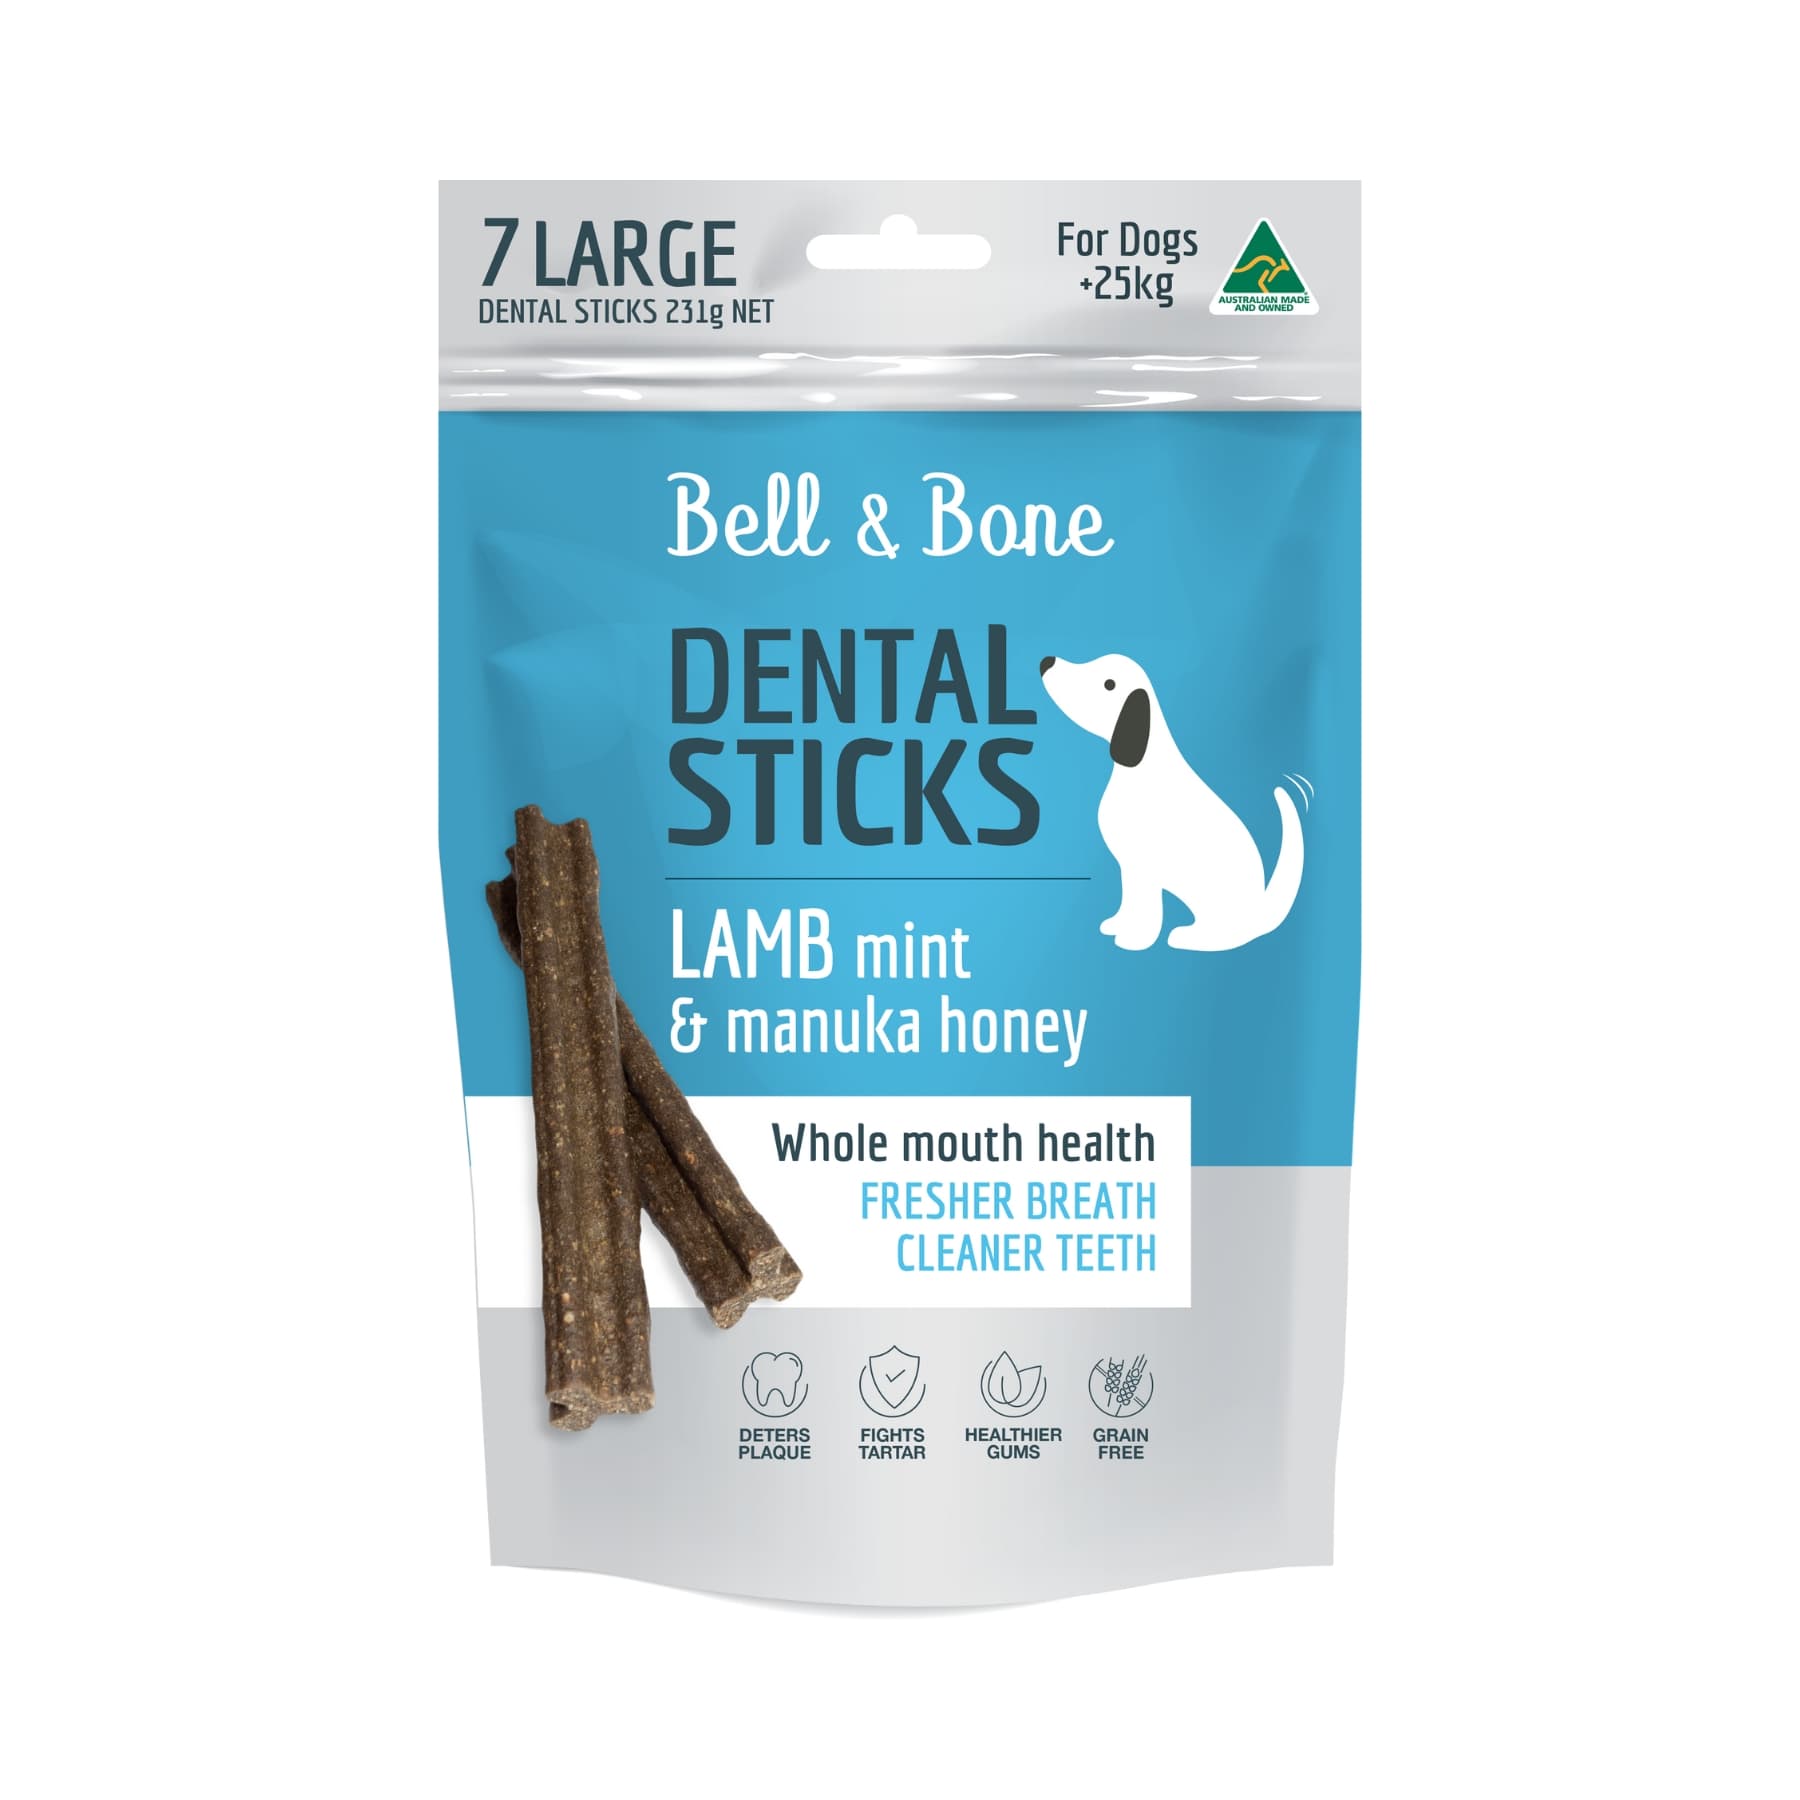 Bell & Bone Dental Sticks Lamb, Mint & Manuka Honey Large. Australian Made Dental Treats for Dogs.